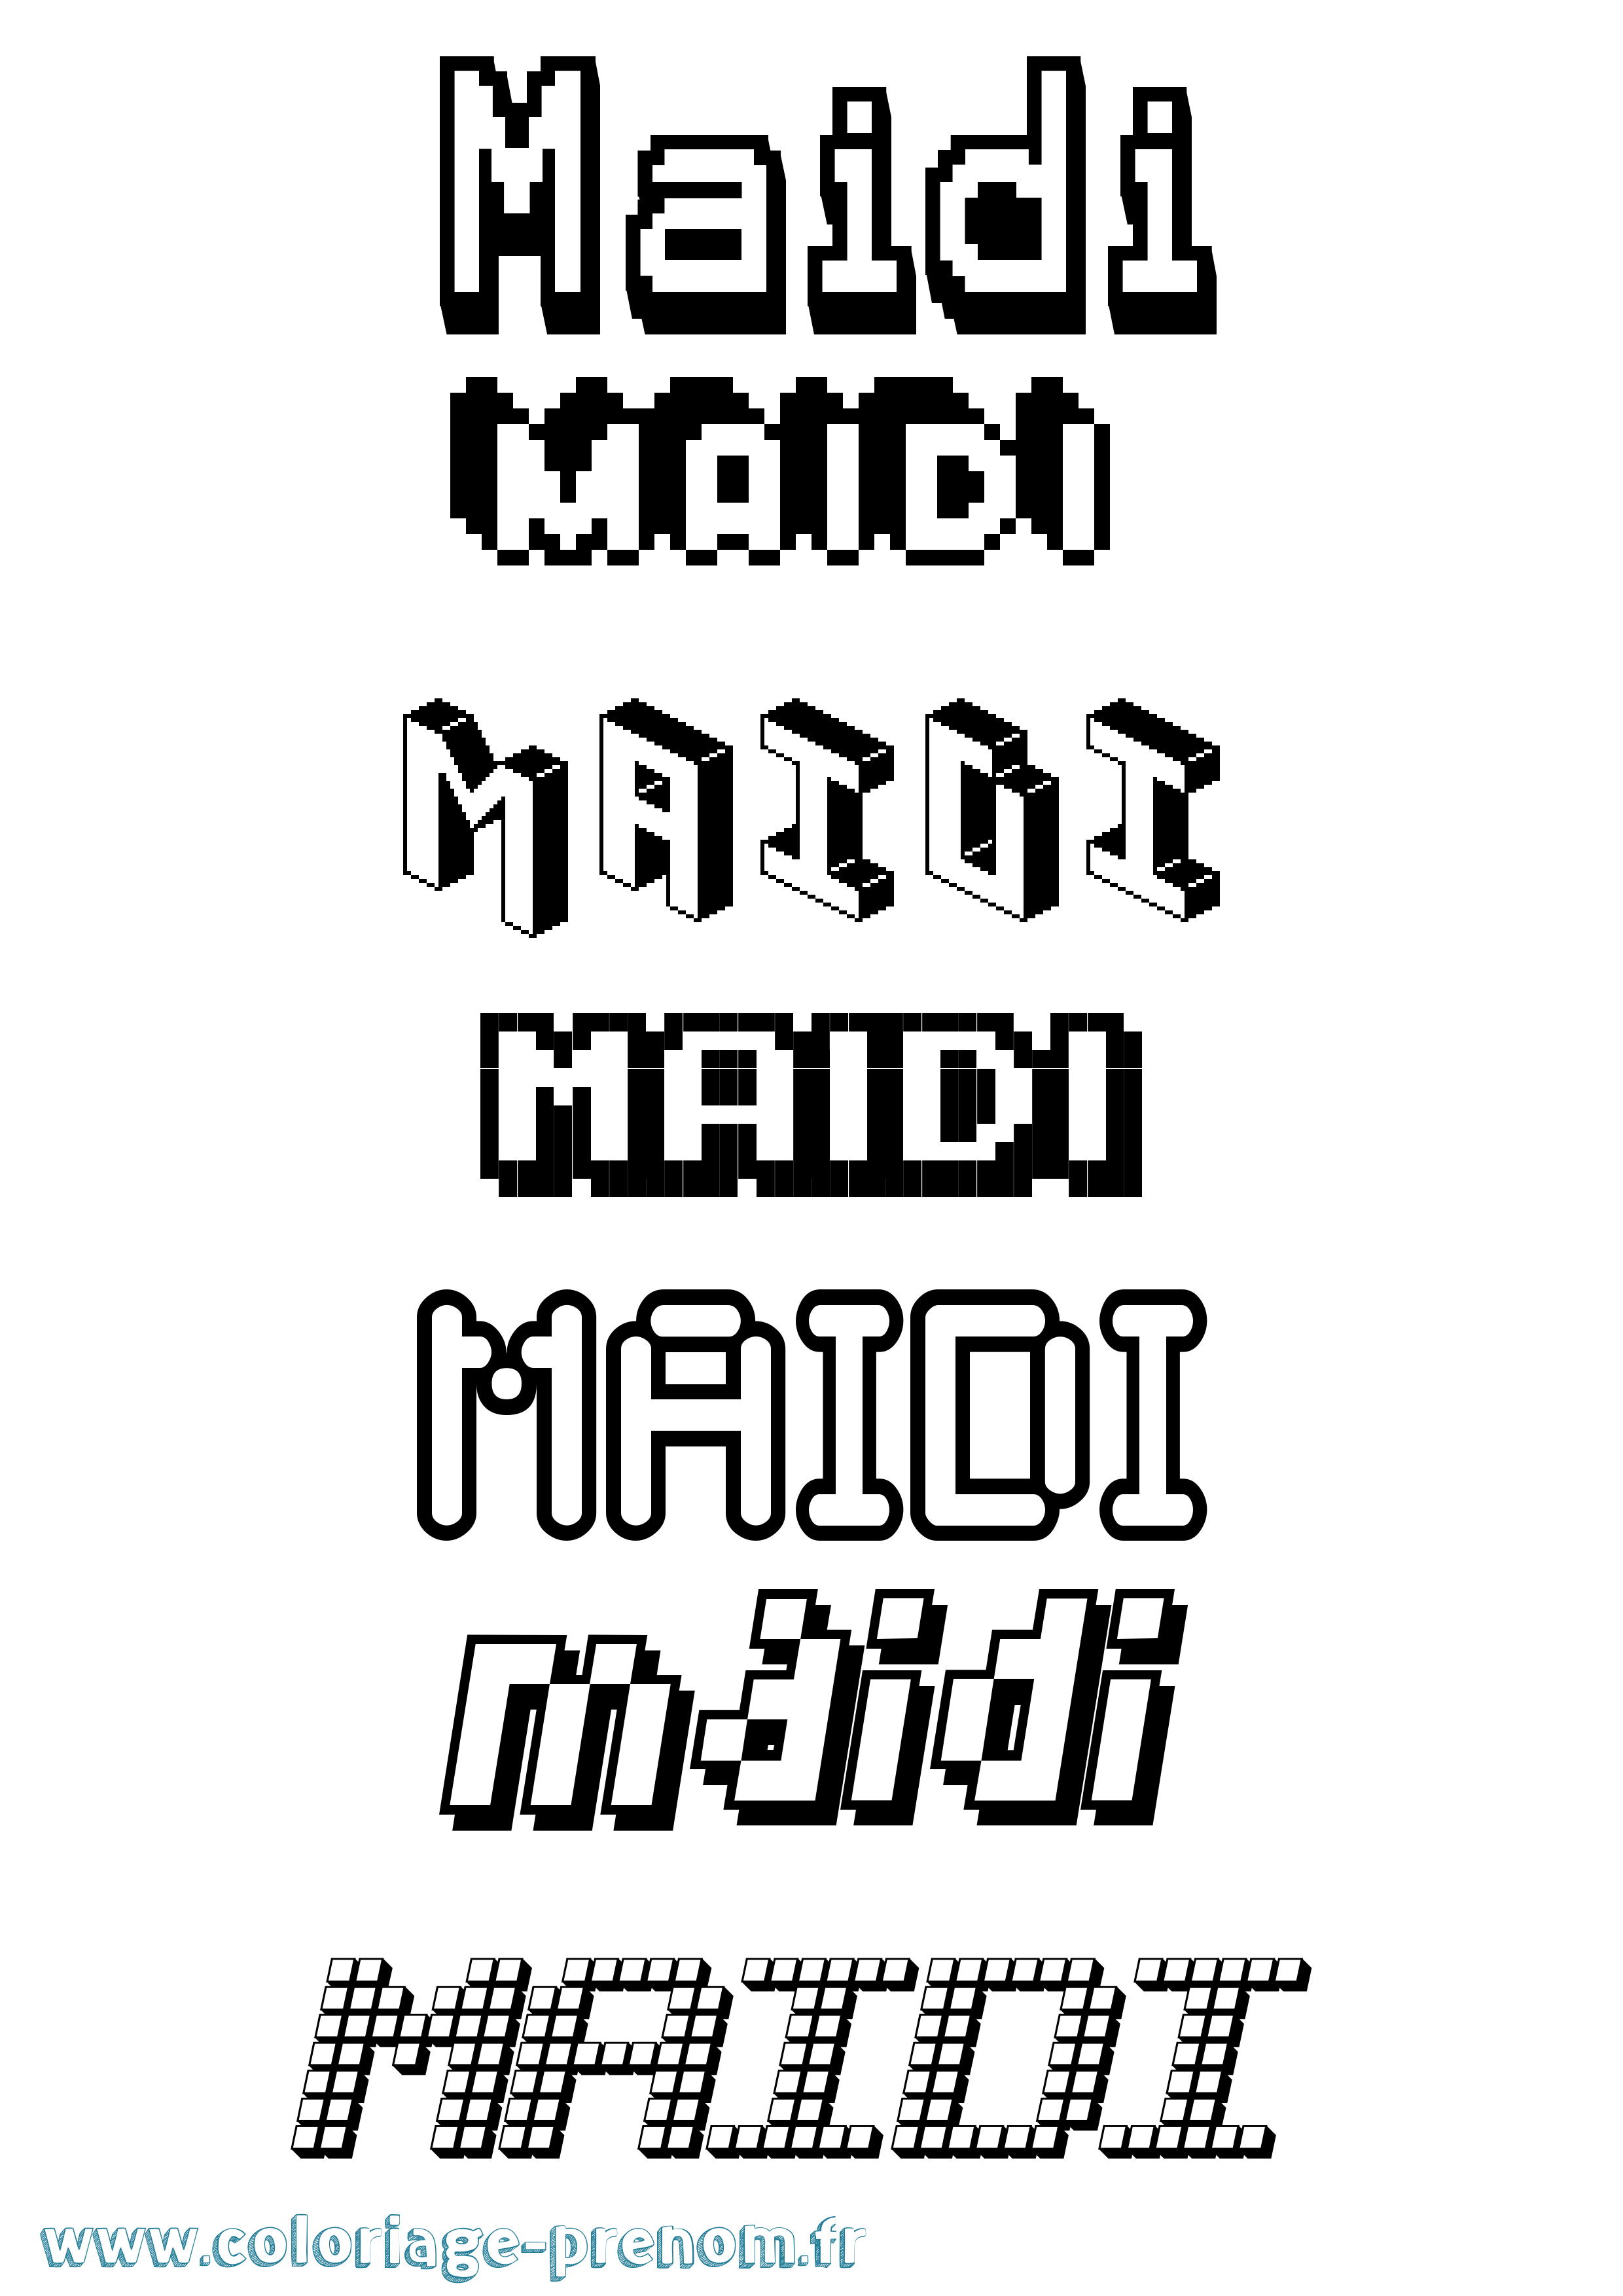 Coloriage prénom Maidi Pixel